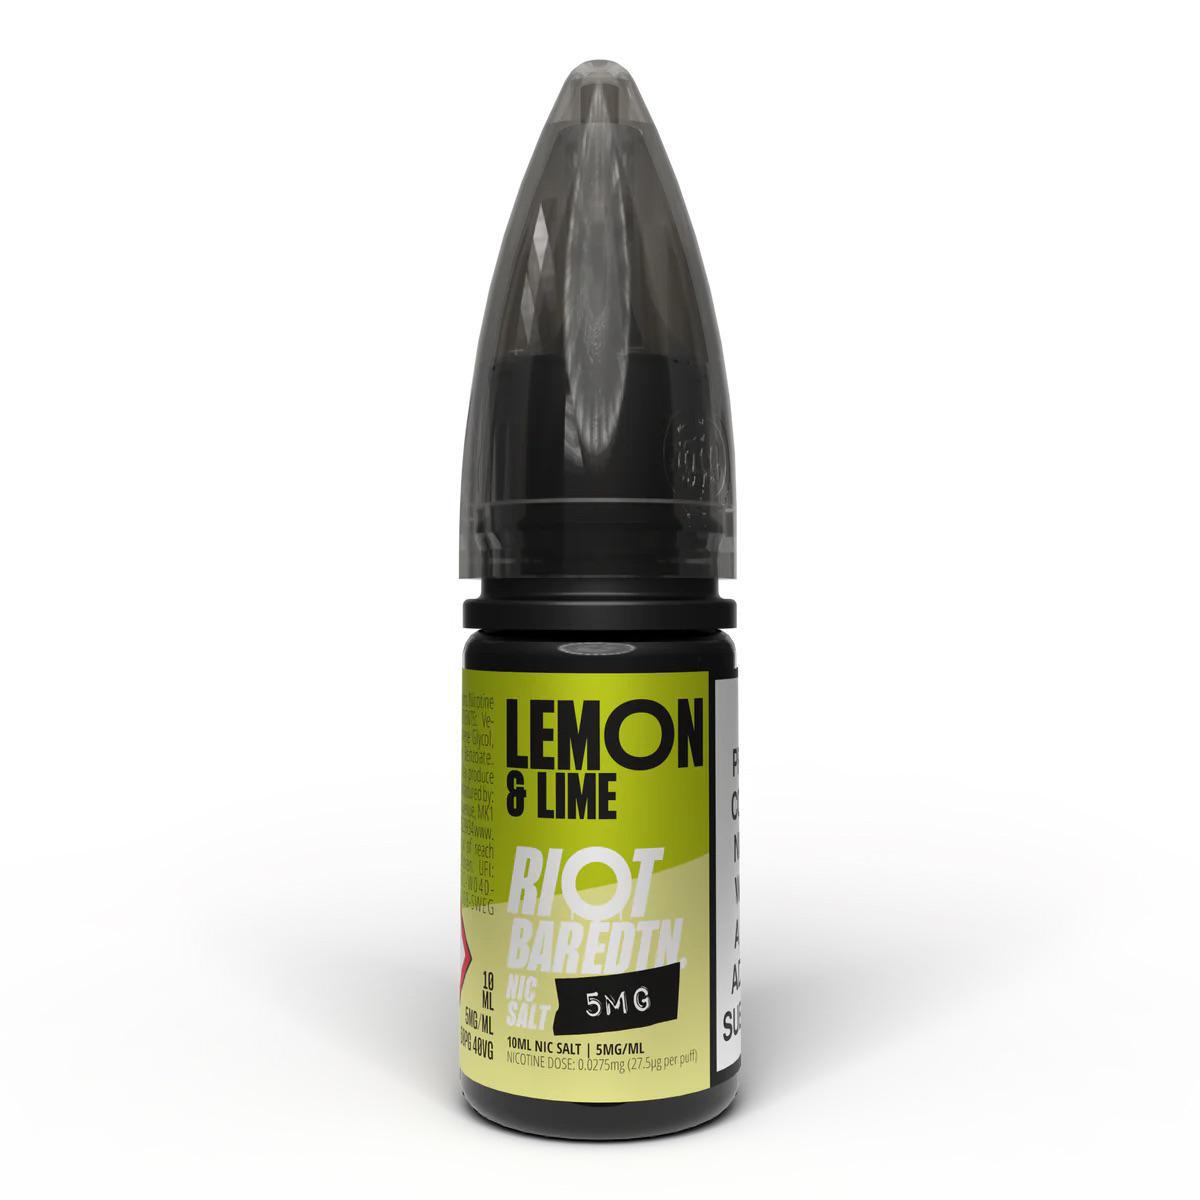 RIOT Bar EDTN - Lemon Lime 10ml E-Liquid - The British Vape Company